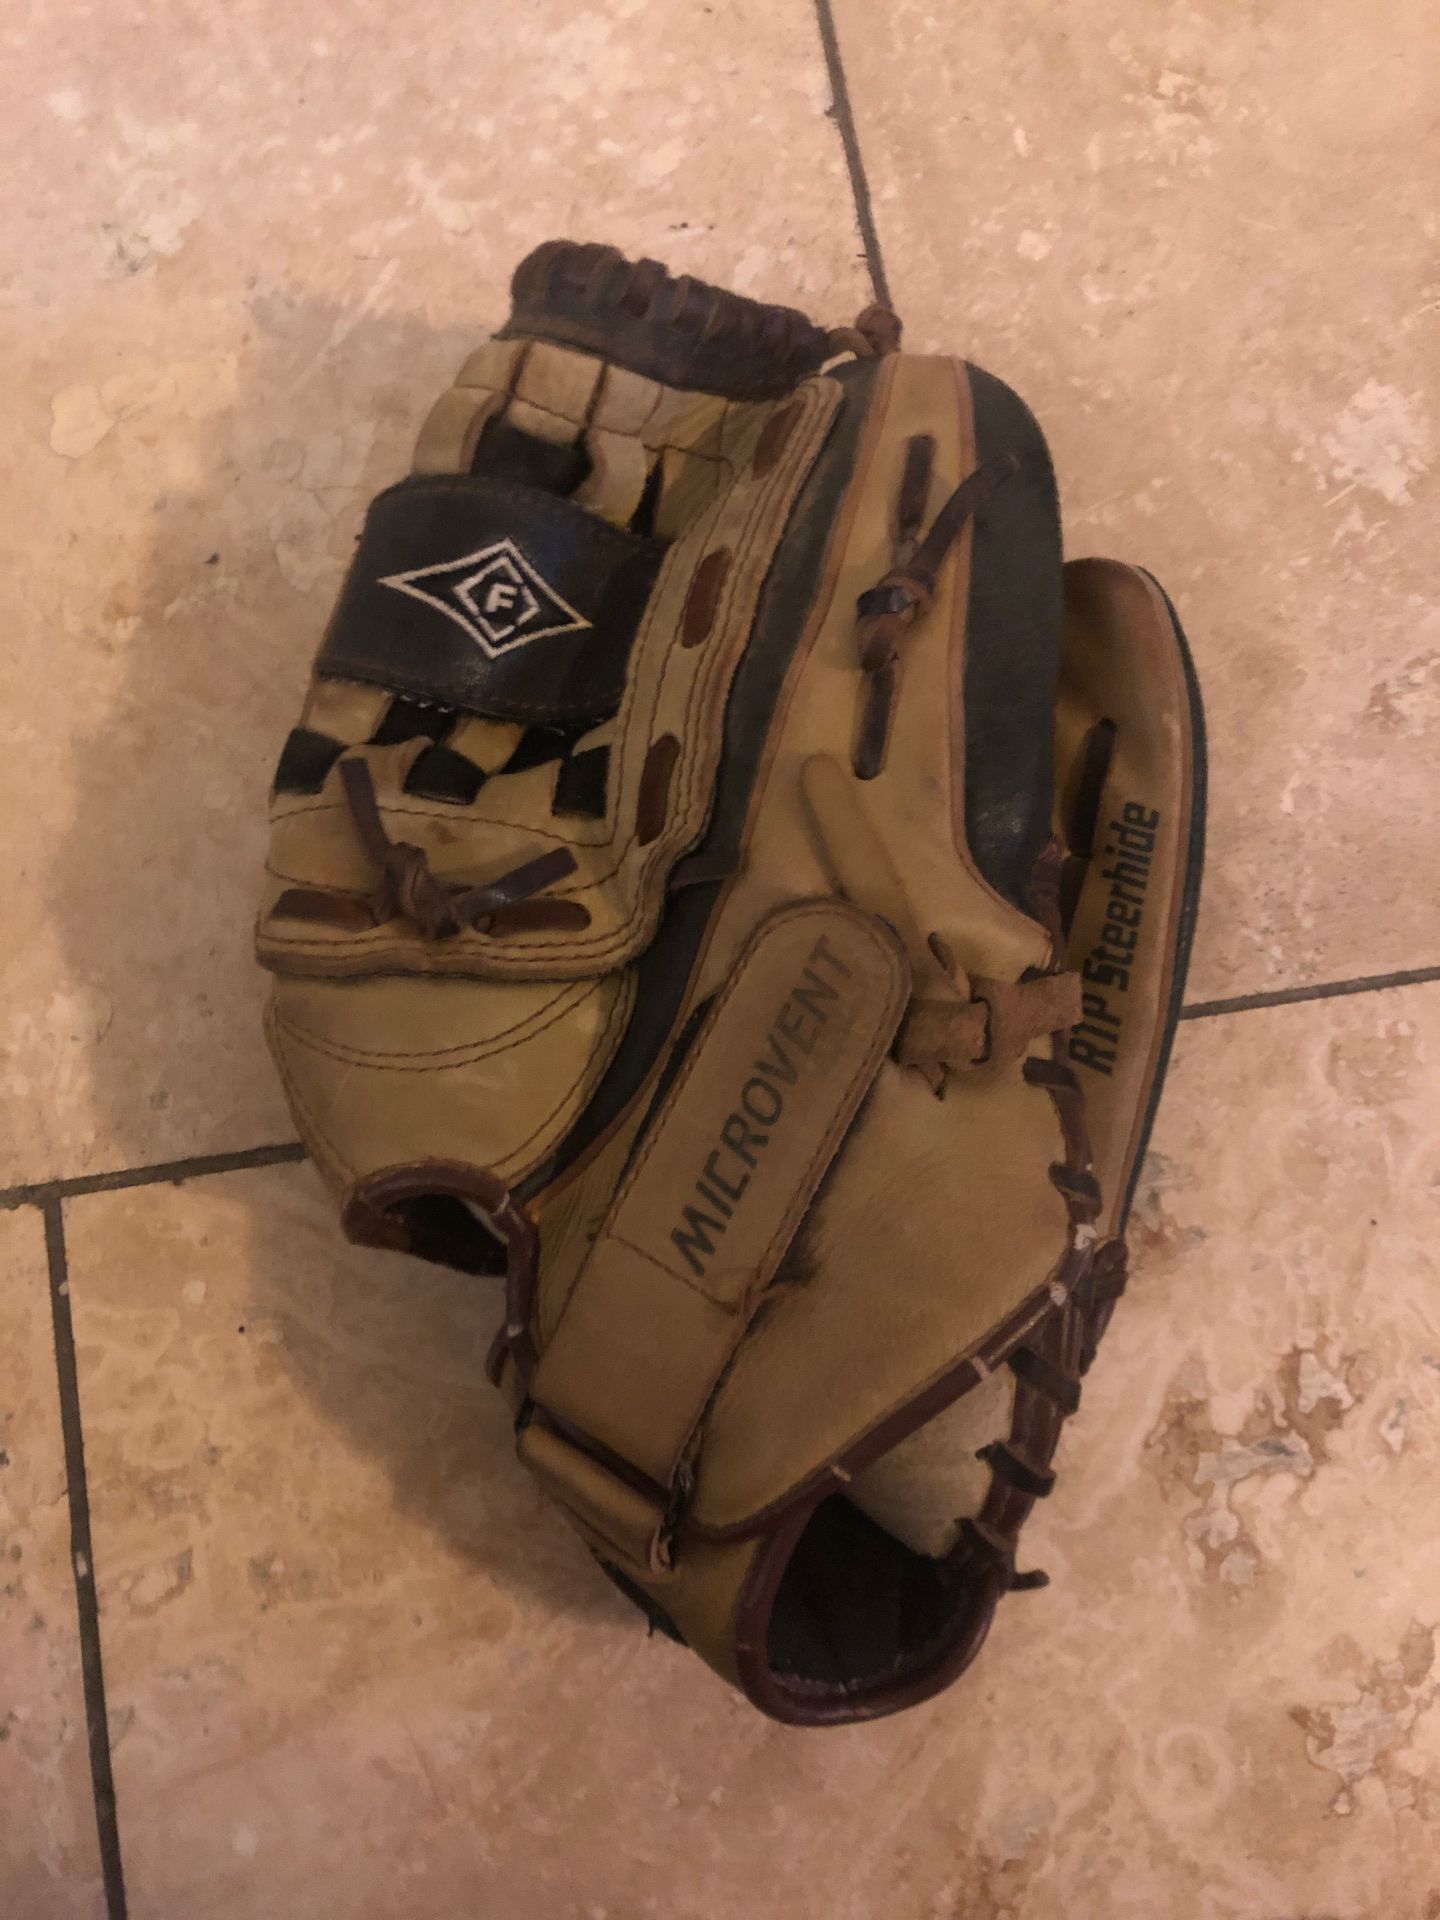 13 inch softball glove